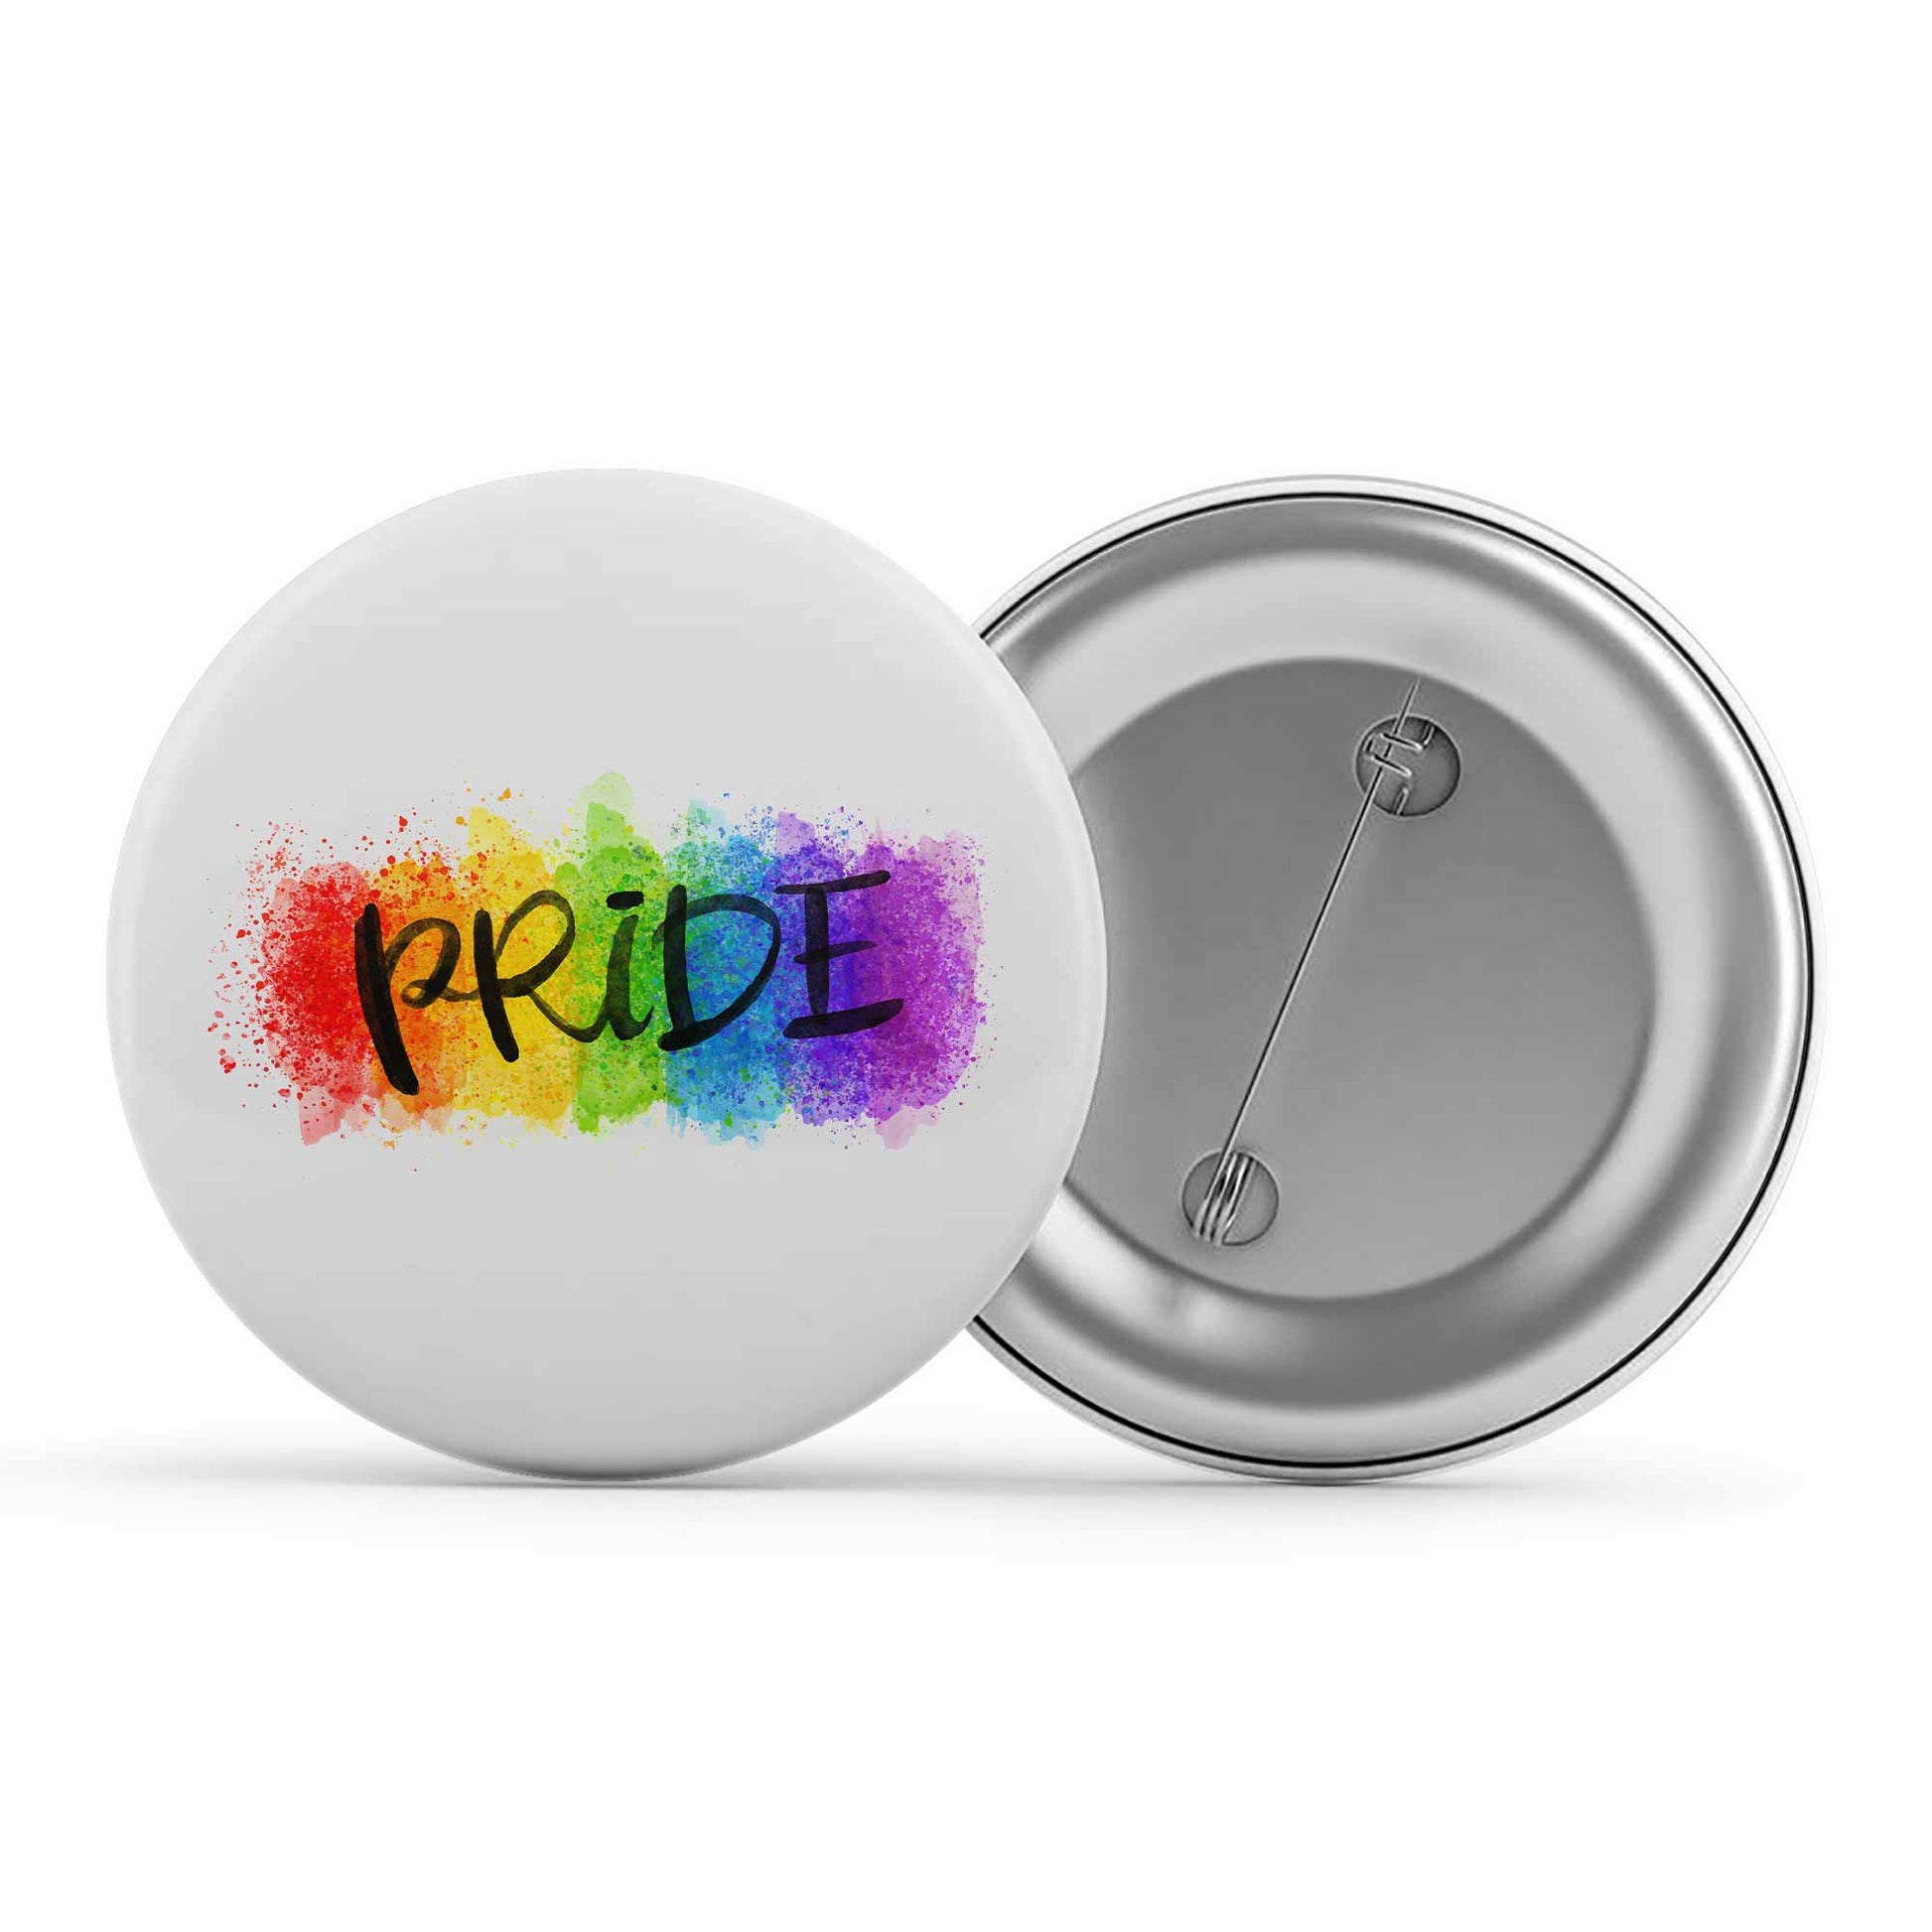 pride pride badge pin button printed graphic stylish buy online india the banyan tee tbt men women girls boys unisex  - lgbtqia+